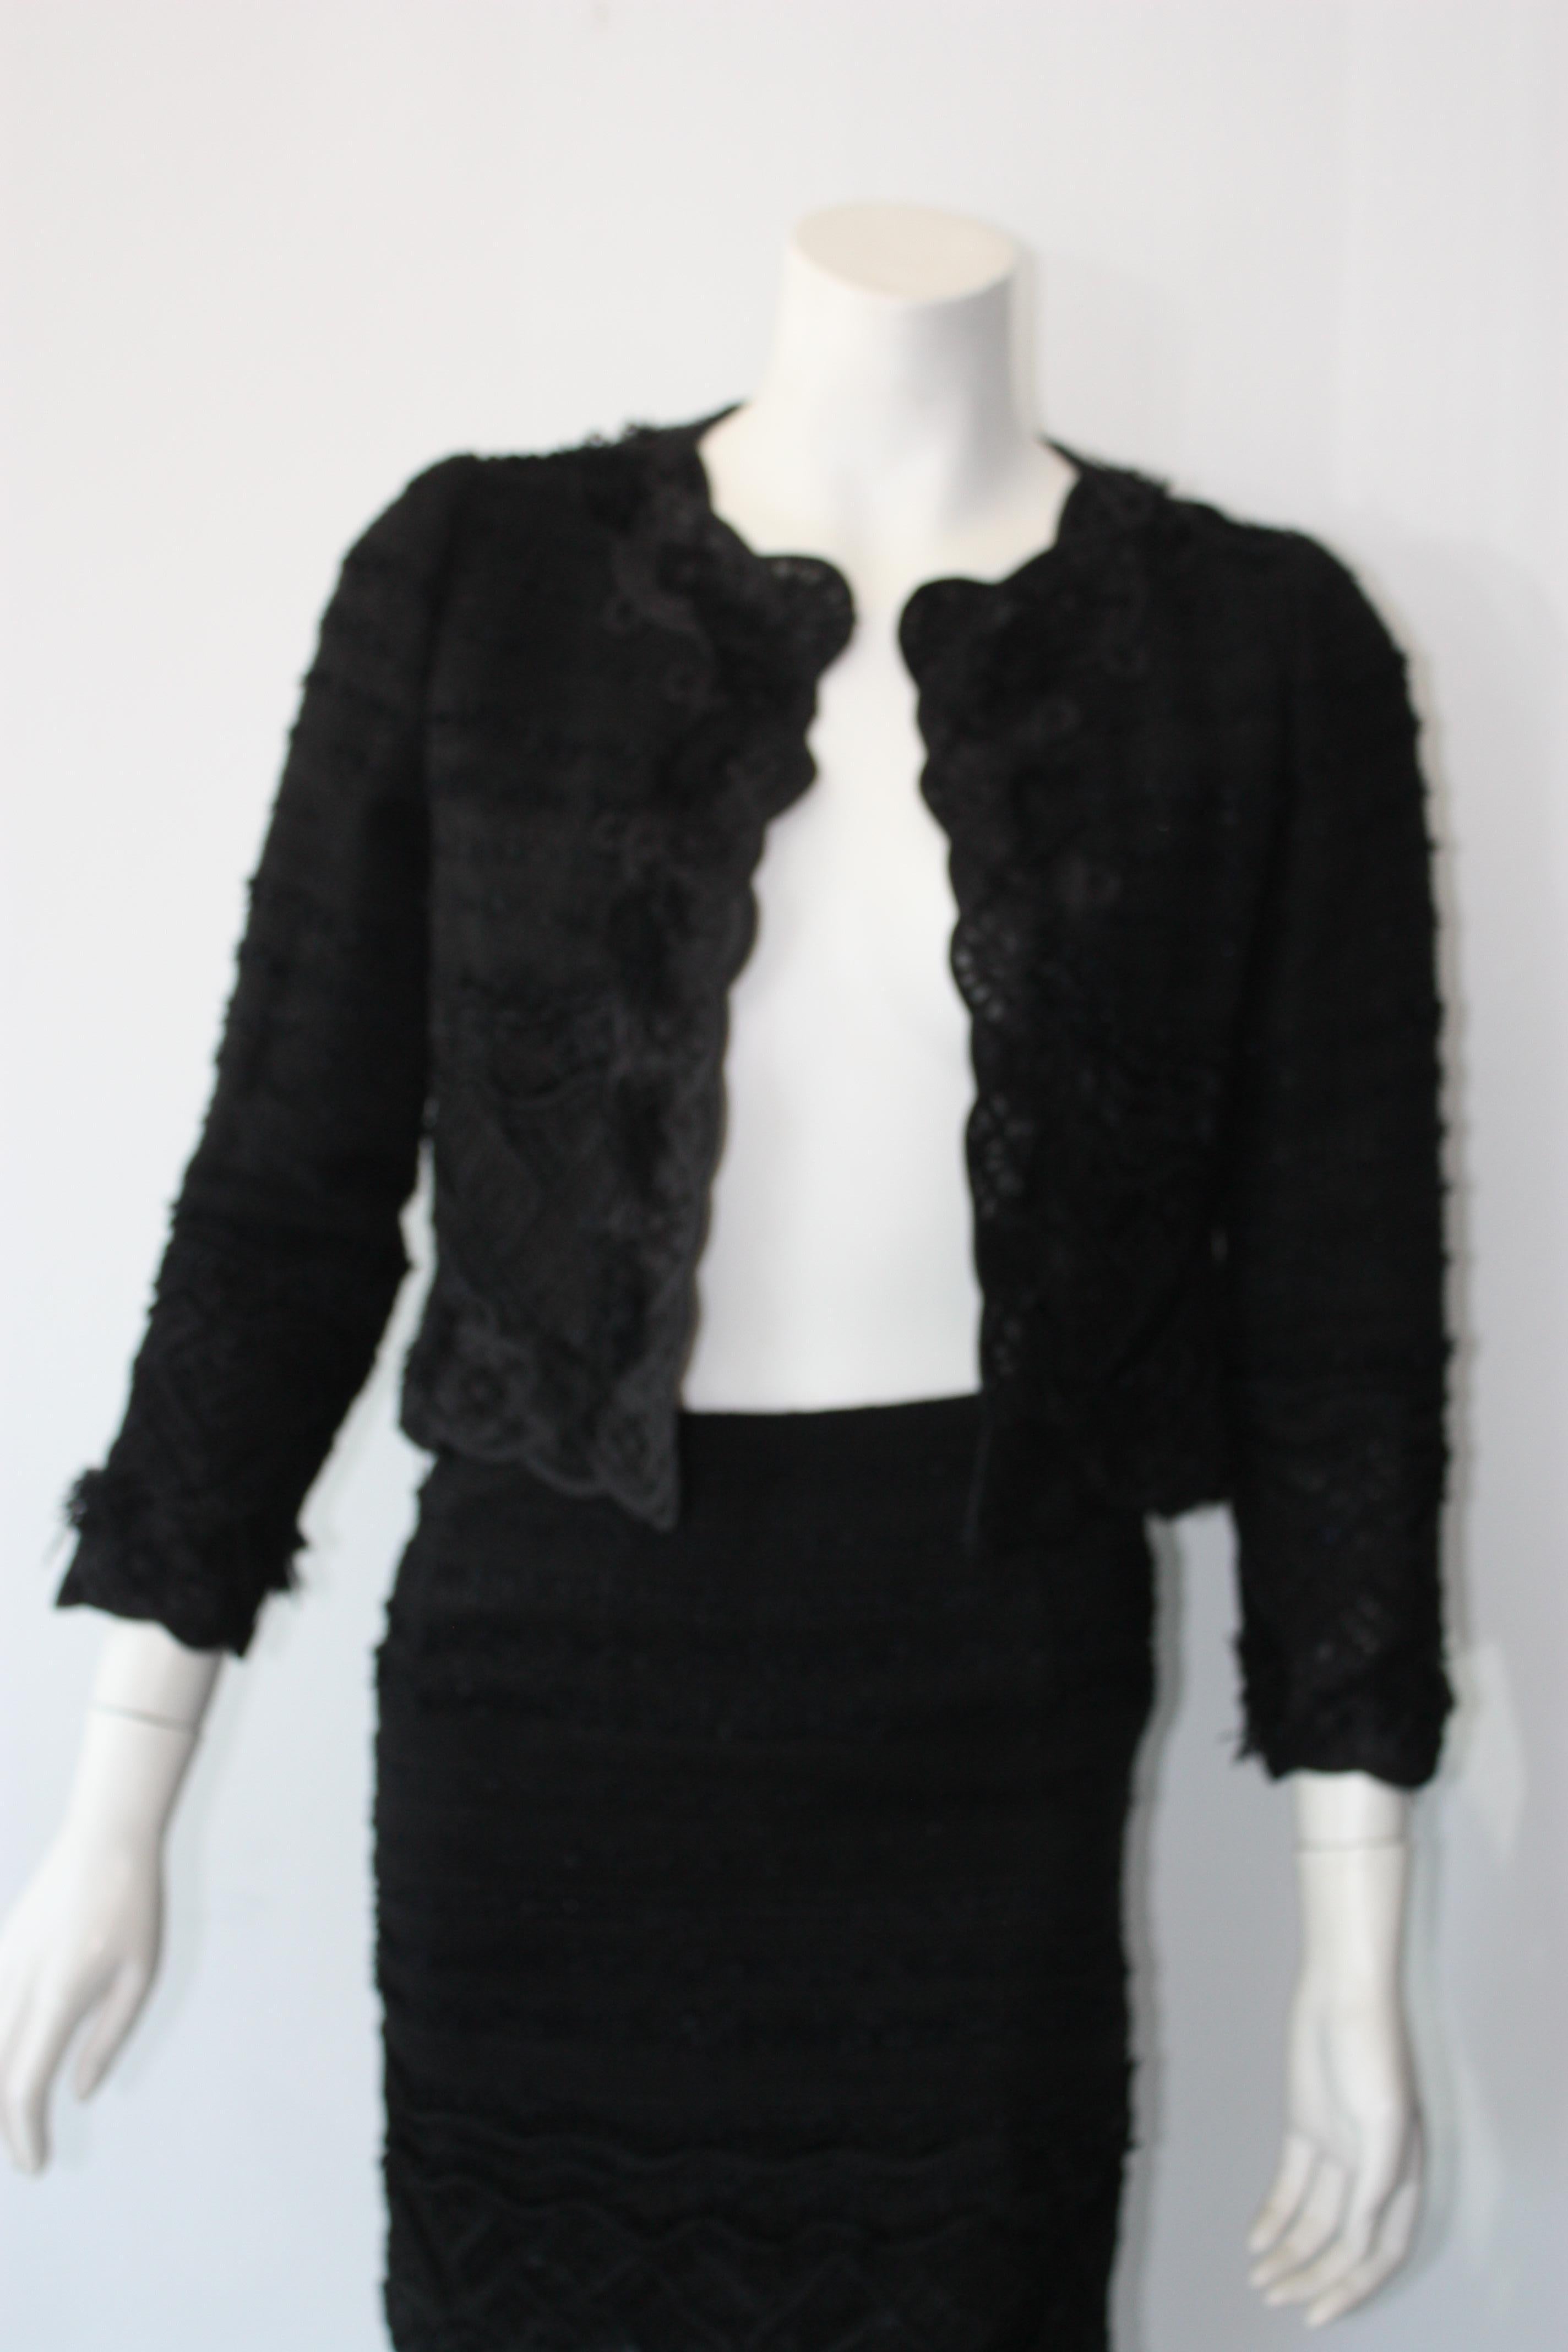 Oscar De La Renta black tweed skirt suit with tonal applique embellishments.
MINT condition. 
So chic - Jackie O' look 
Size 2 .

Jacket: 100% silk. Trim: 39% cotton, 14% acetate, 23% ramie, 19% nylon, 5% polythylene. Lining: 100% silk.
Skirt: 100%